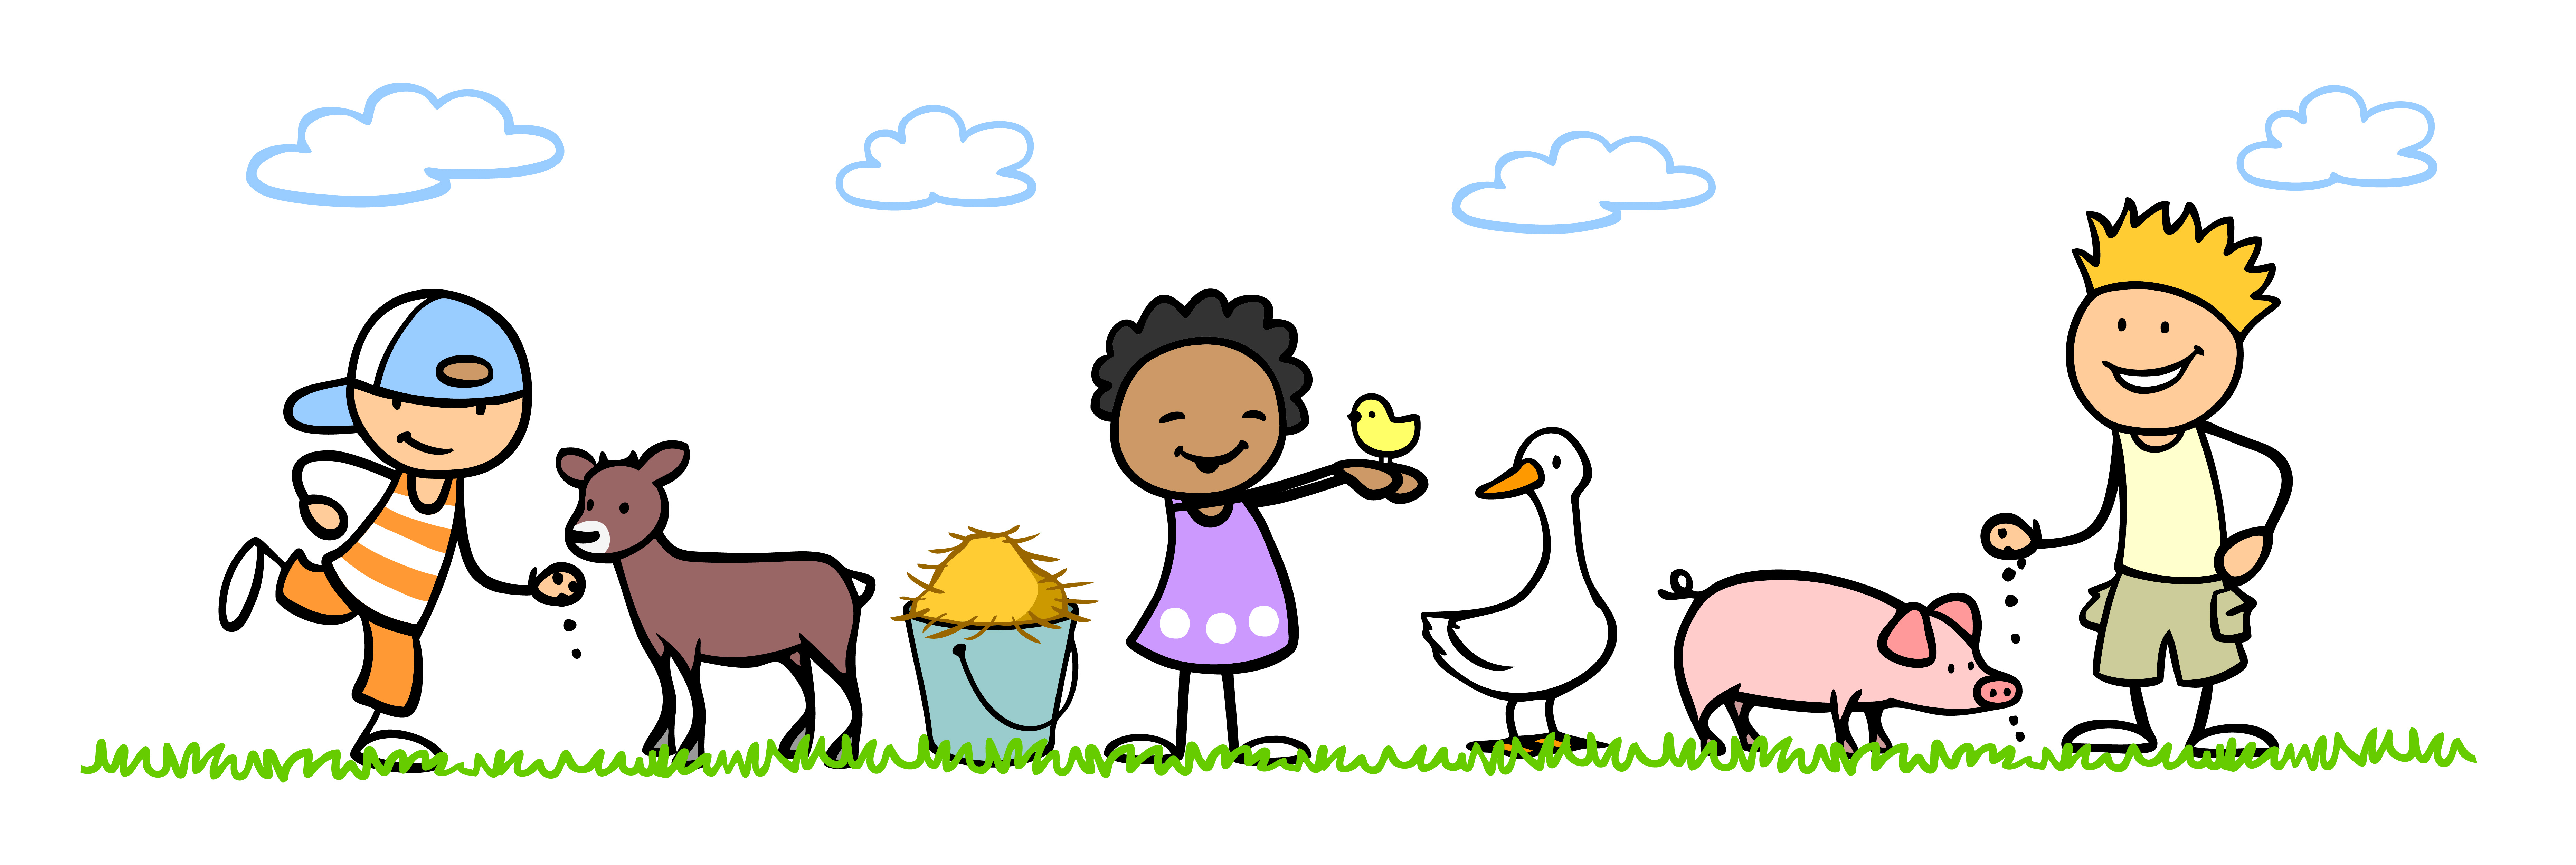 cartoons of kids with farm animals 